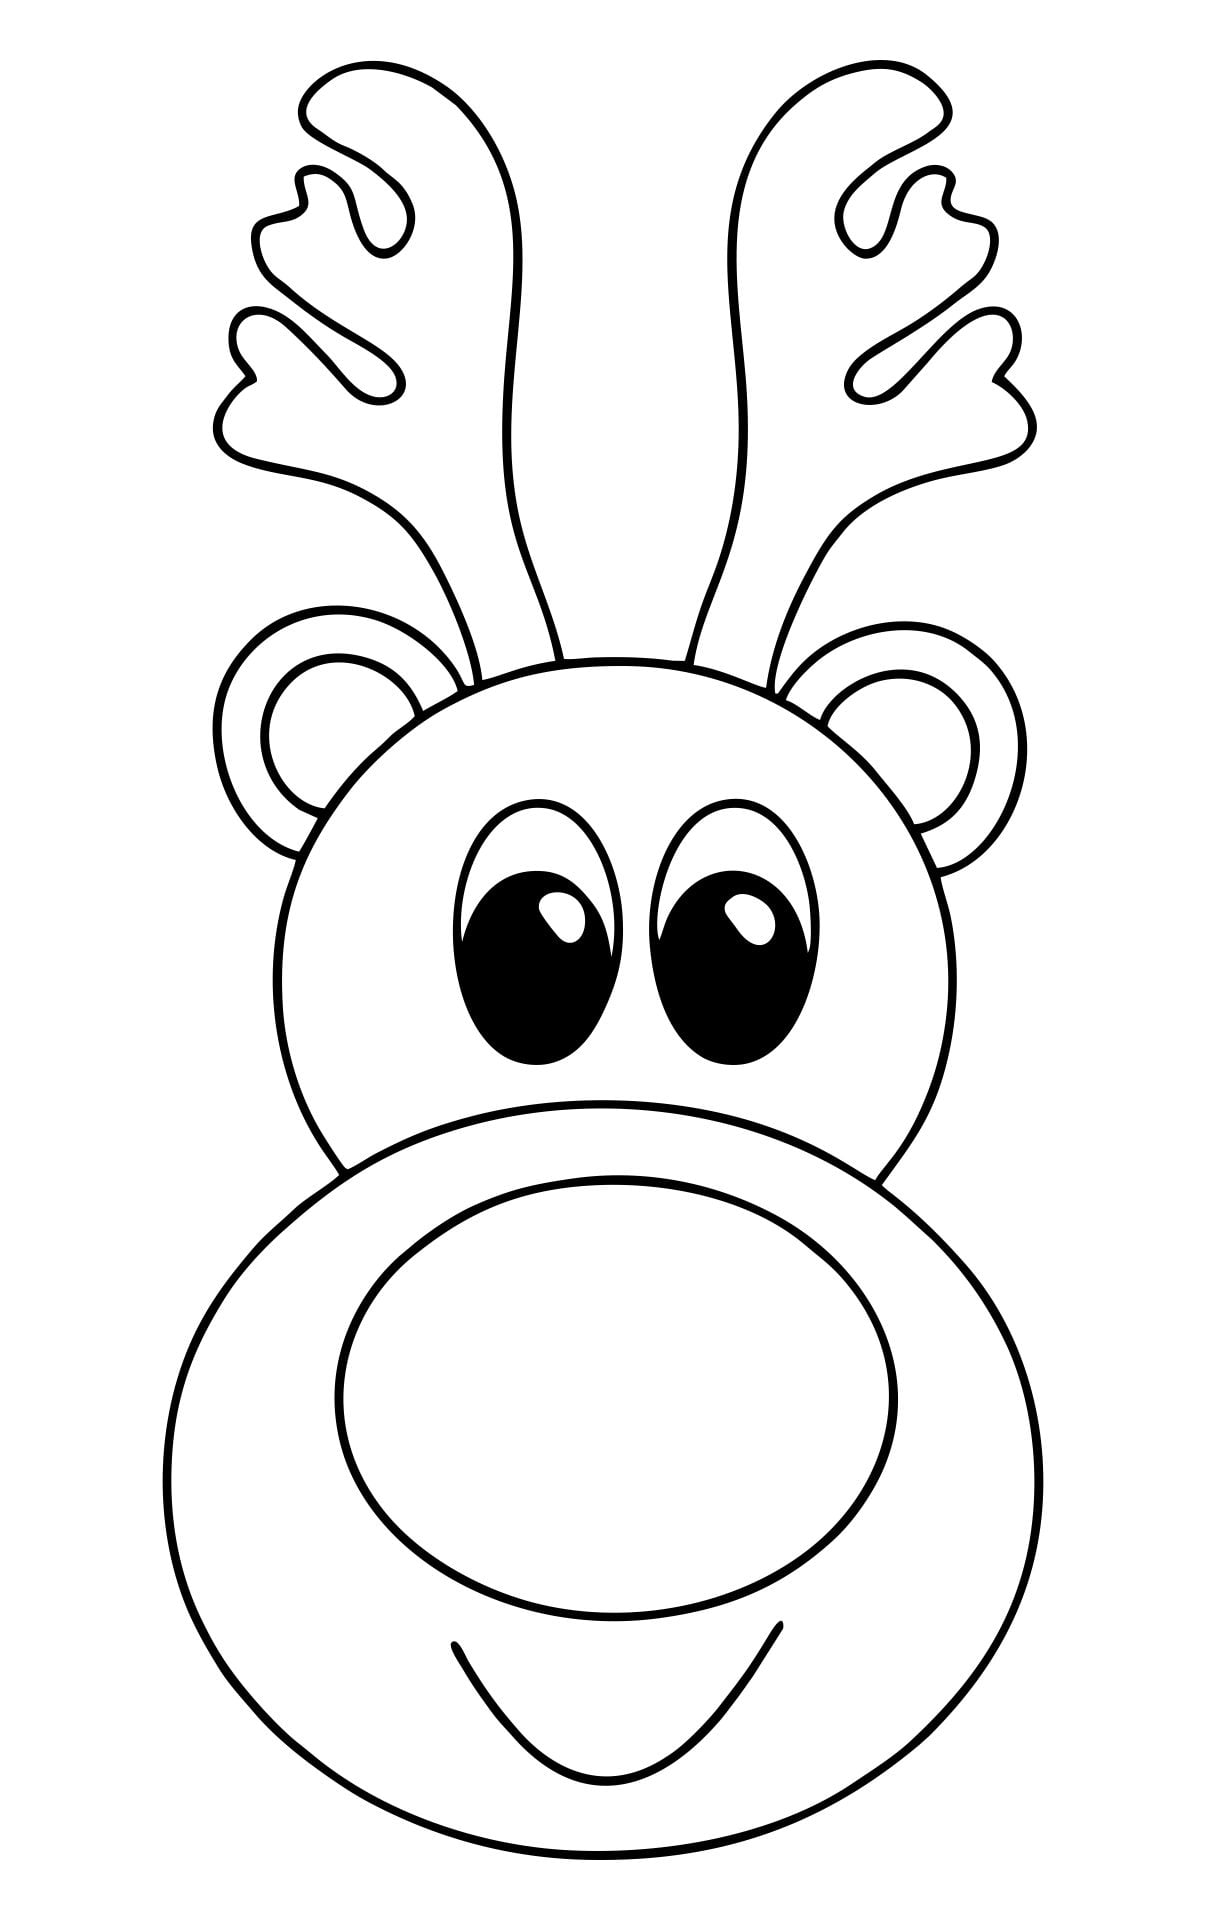 Reindeer Face Template Printable Reindeer Face Reindeer Card Kids Christmas Coloring Pages